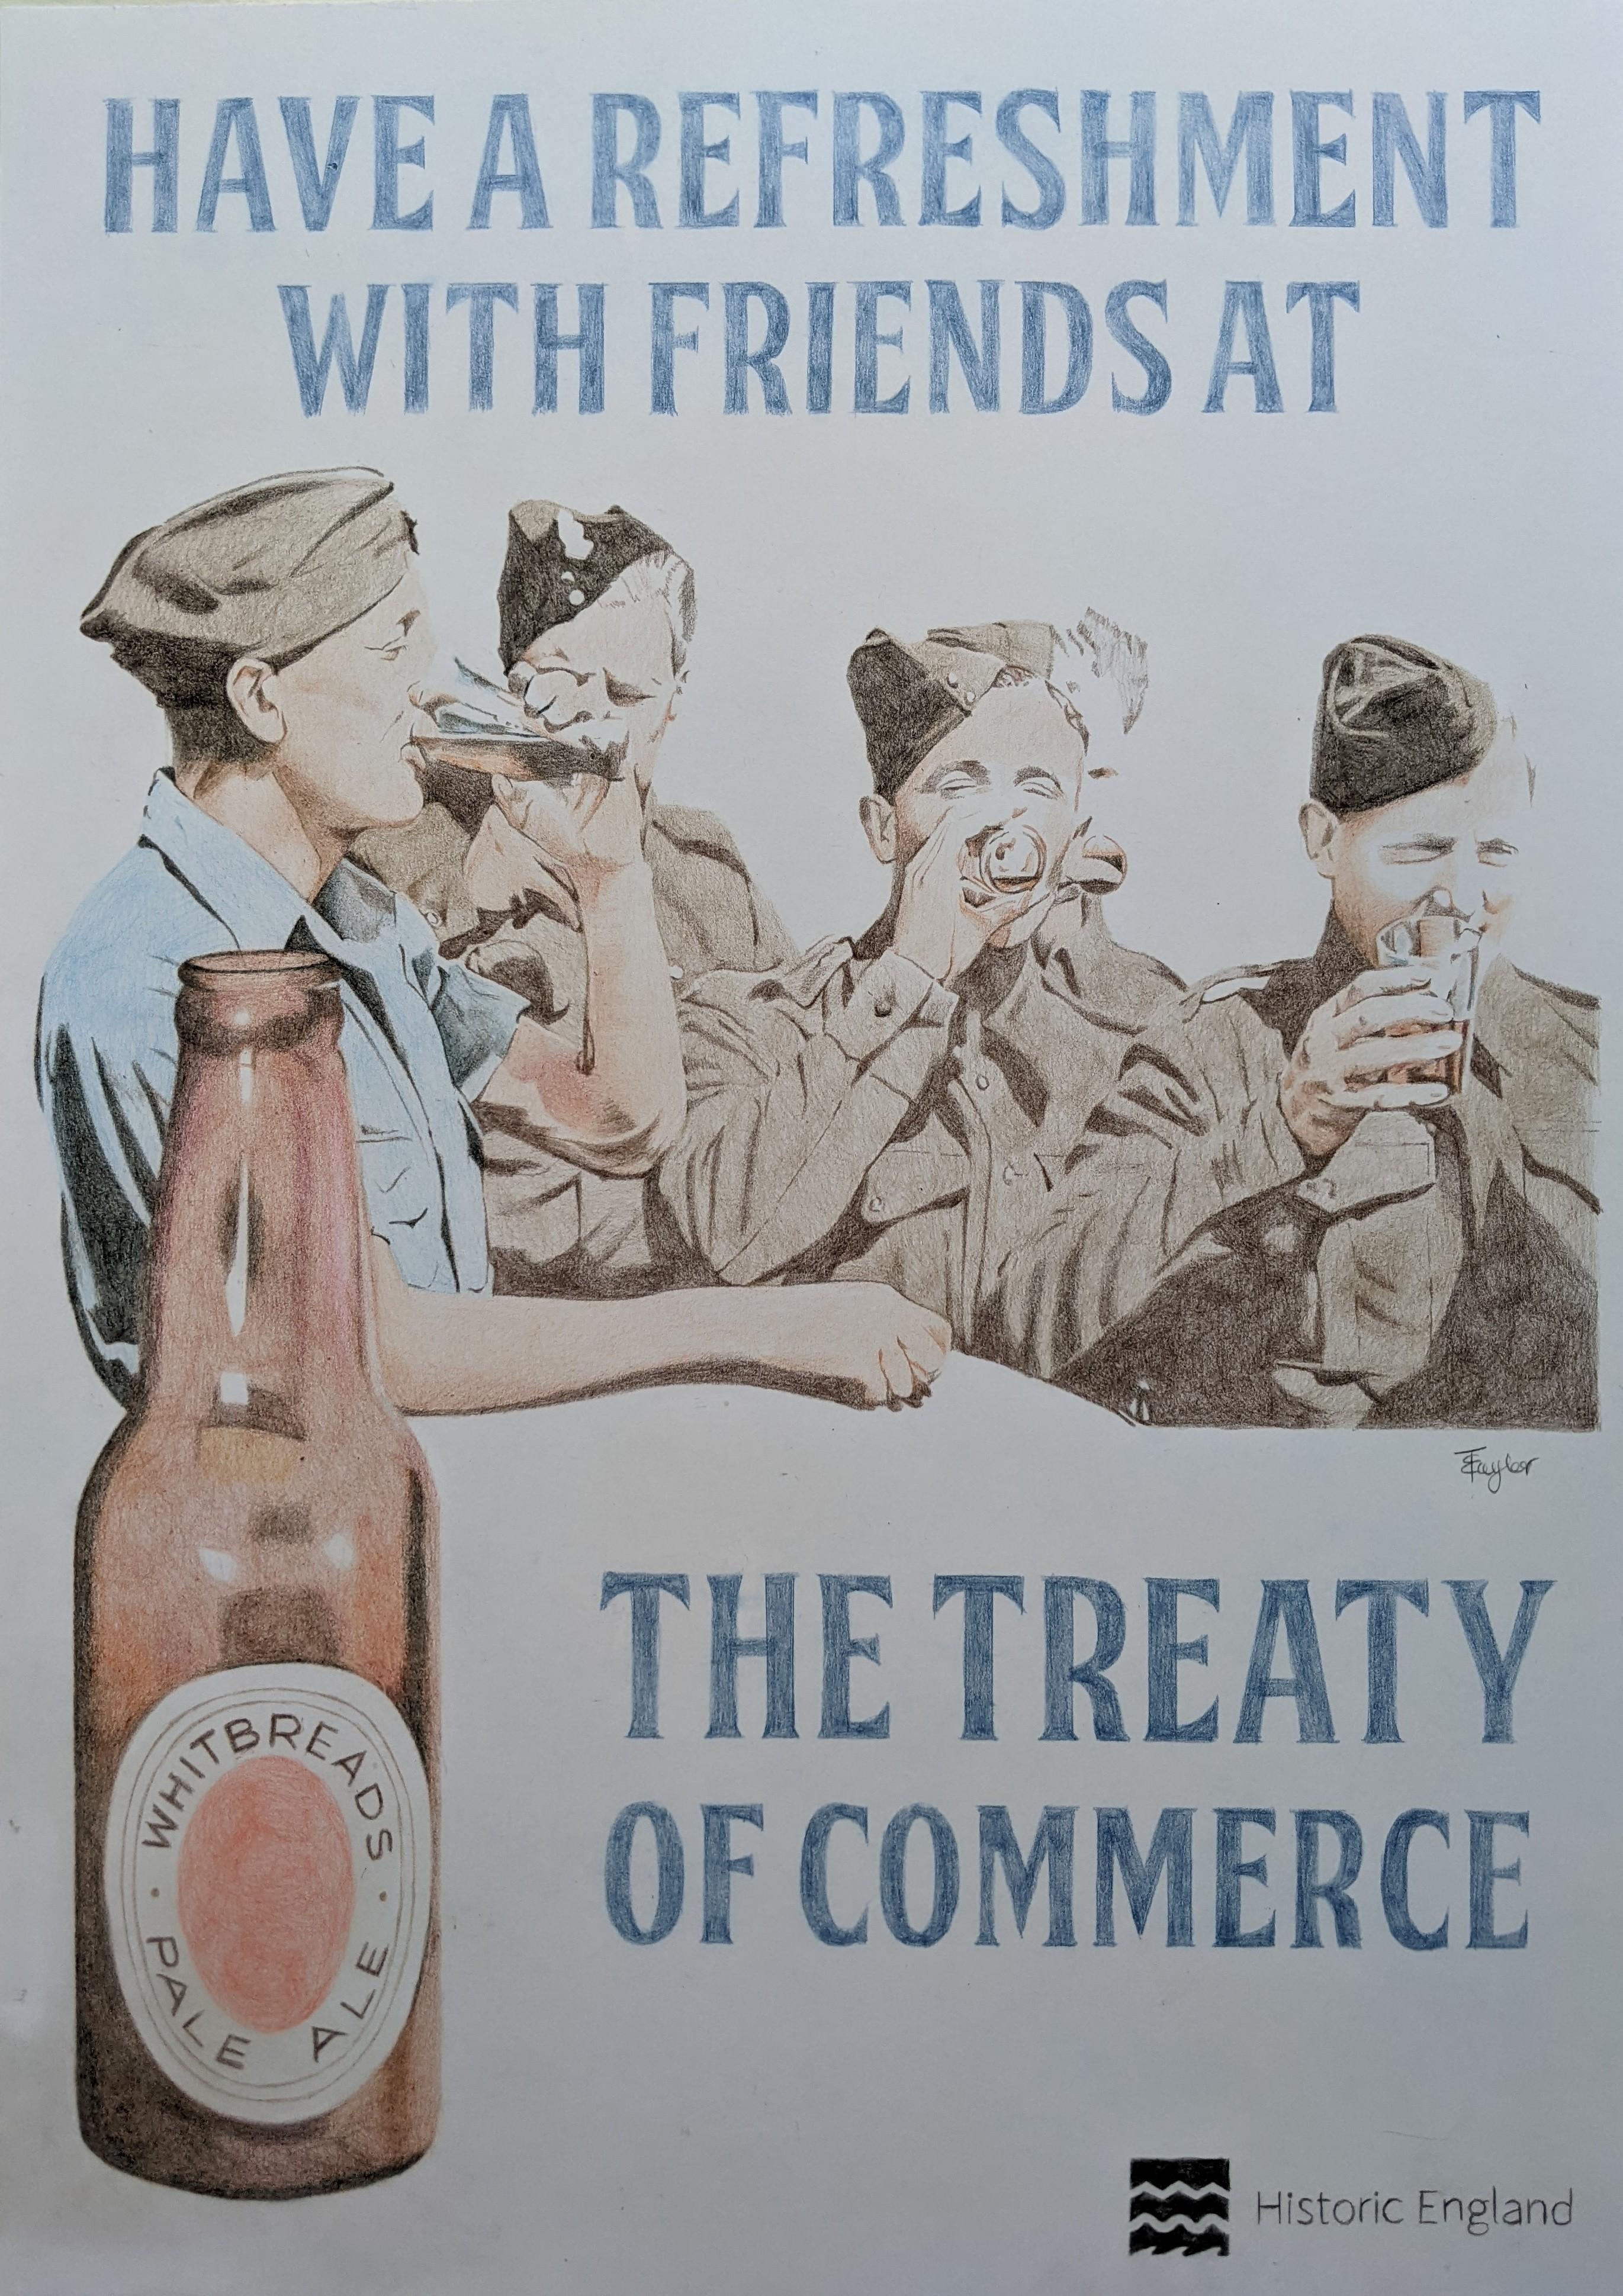 1940s vintage refreshment poster